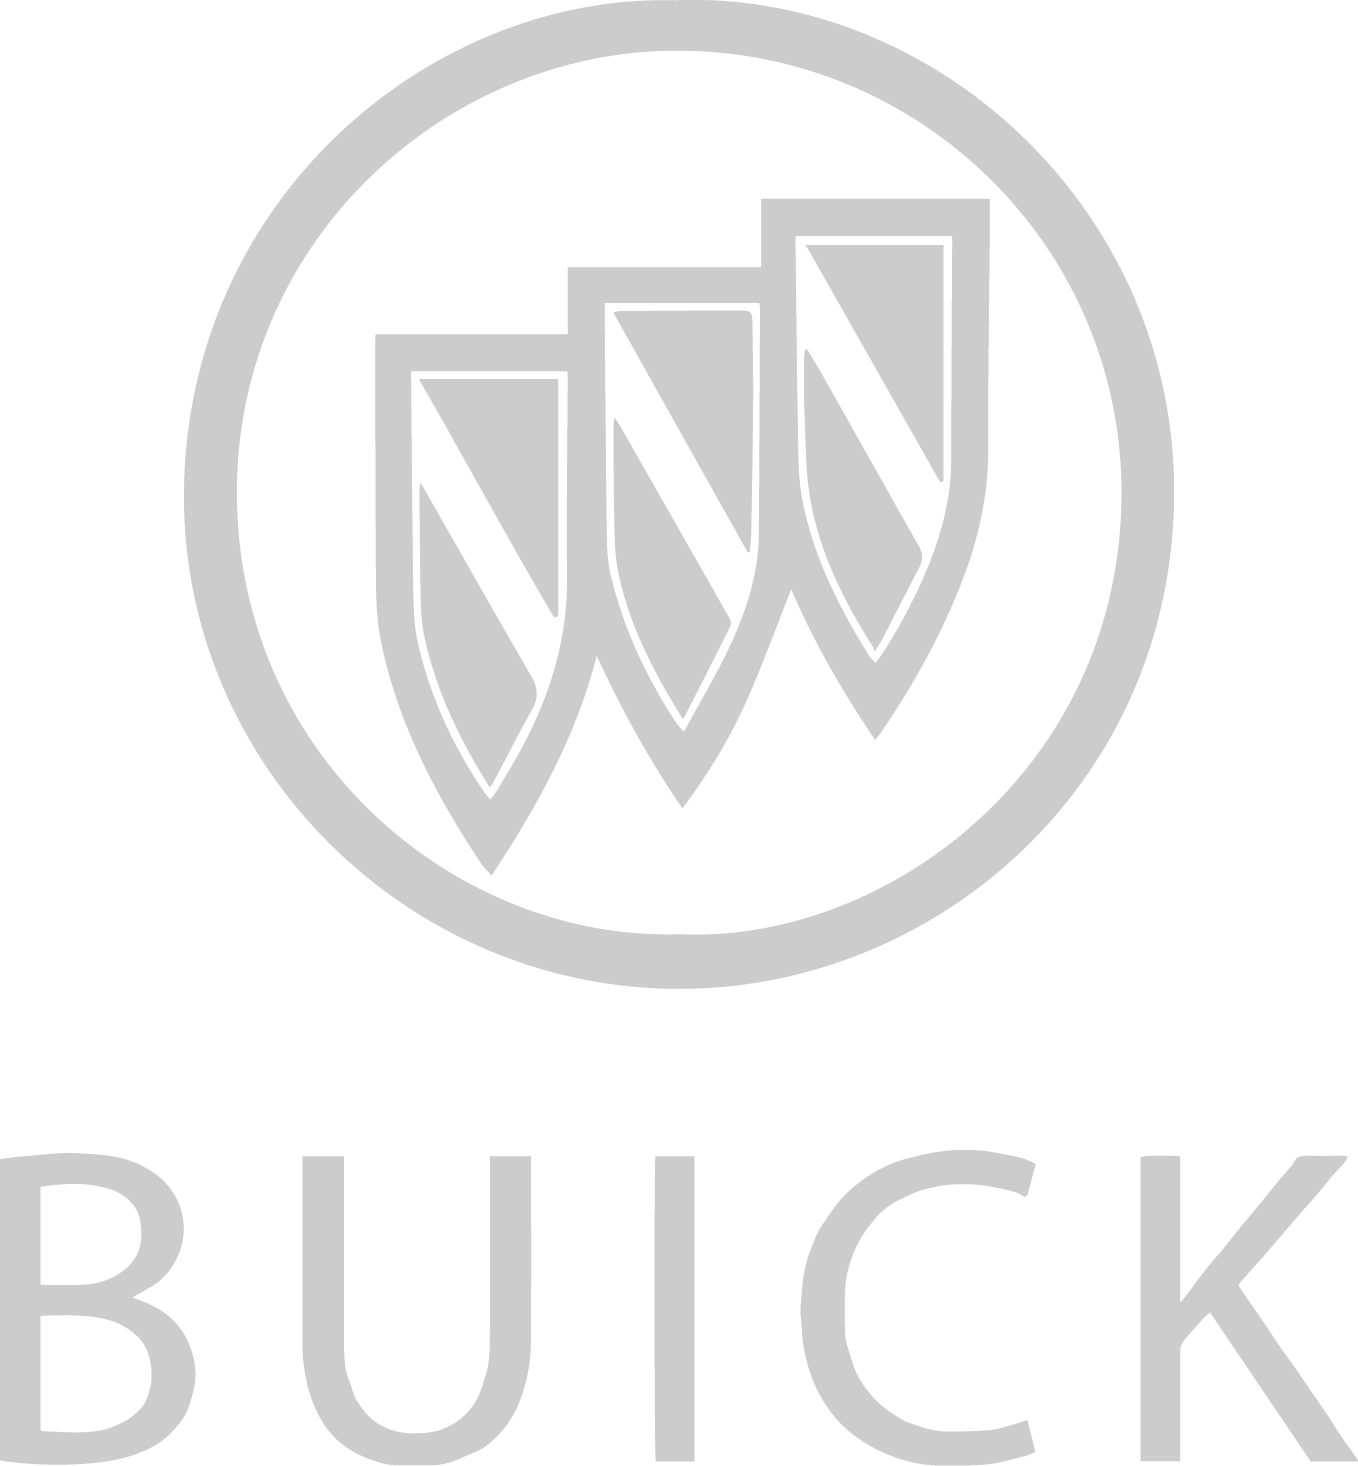 Buick Image